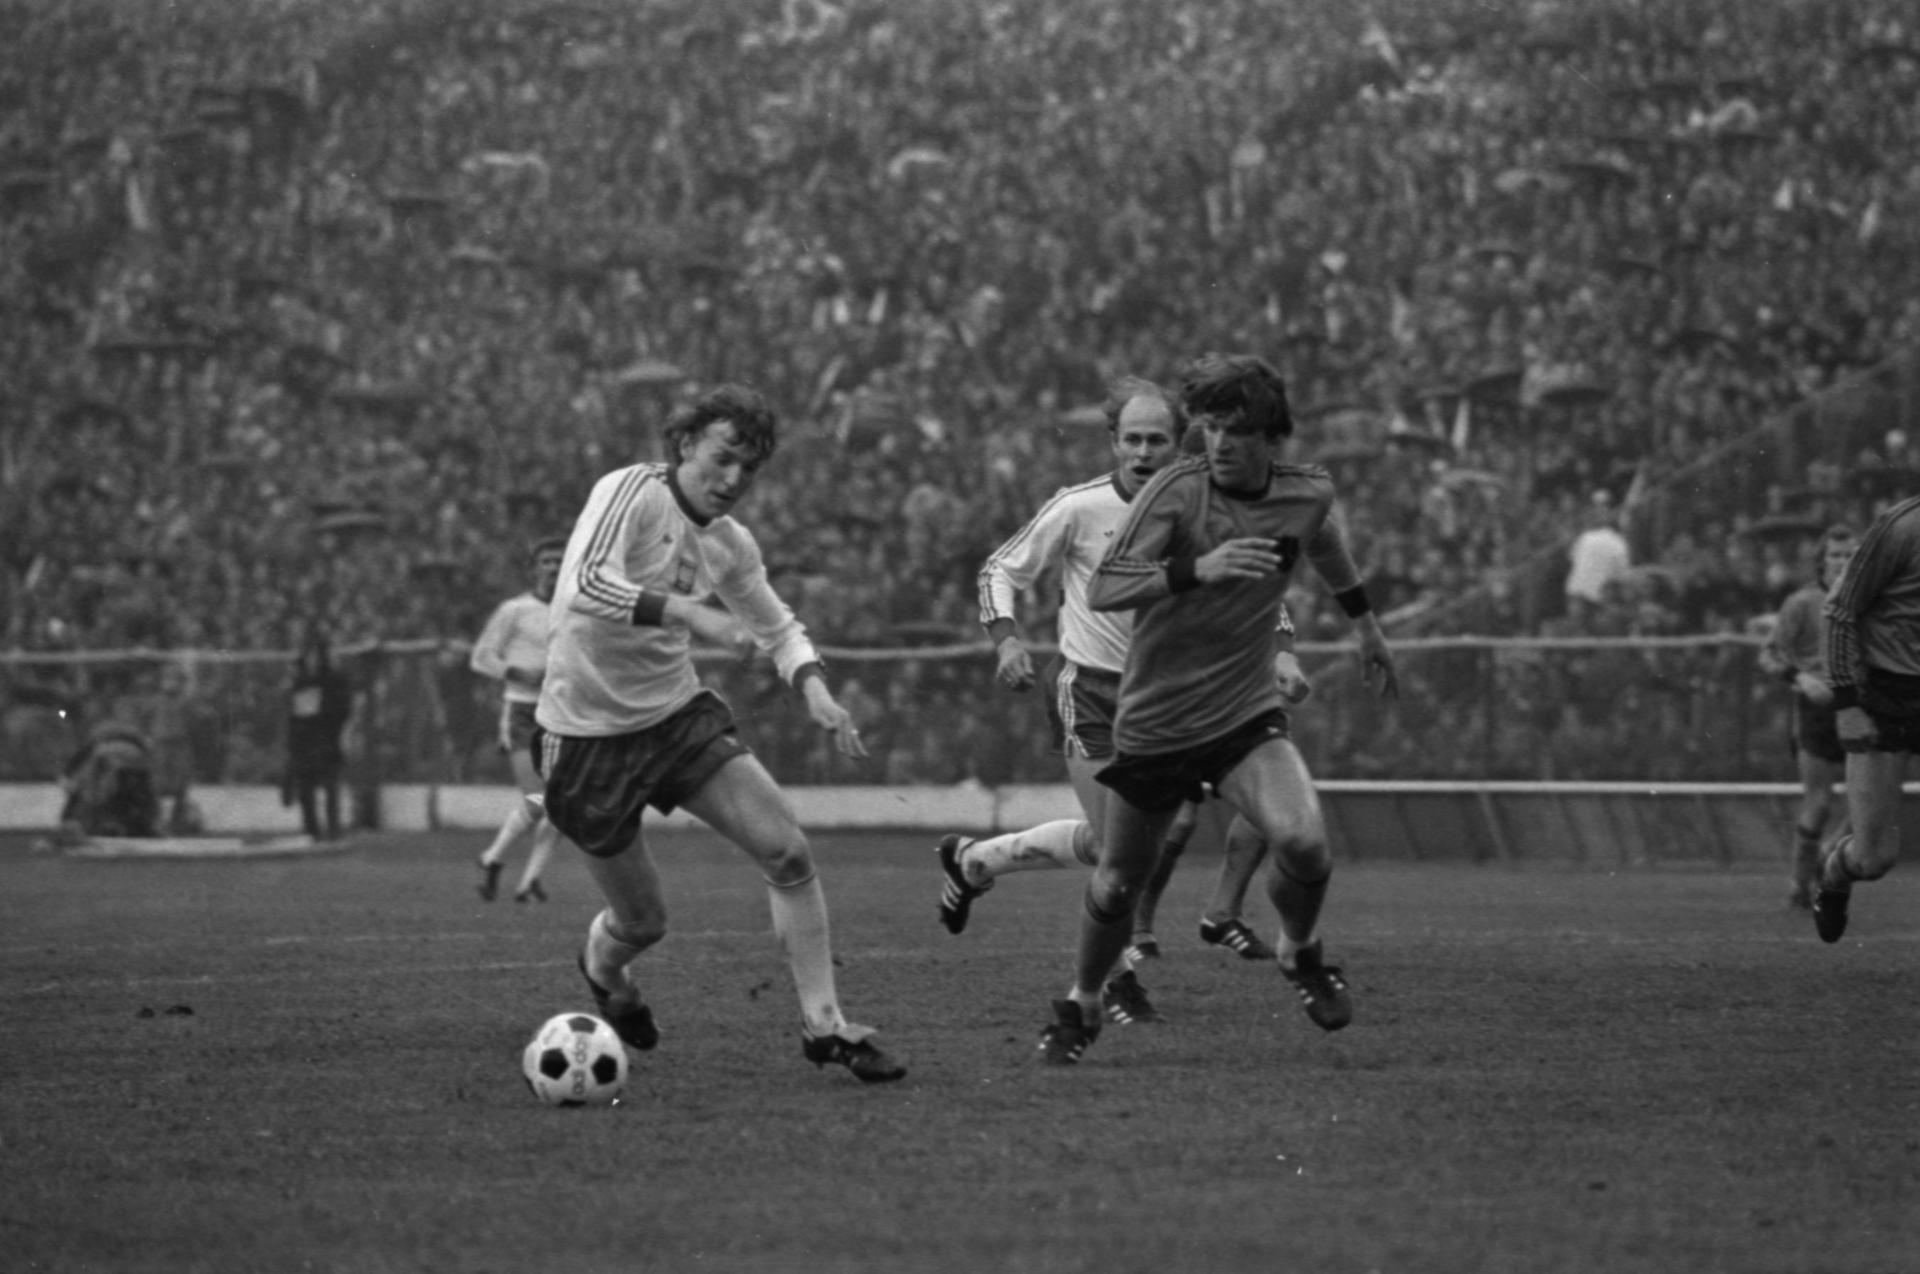 Polska - Holandia 2:0 (02.05.1979)